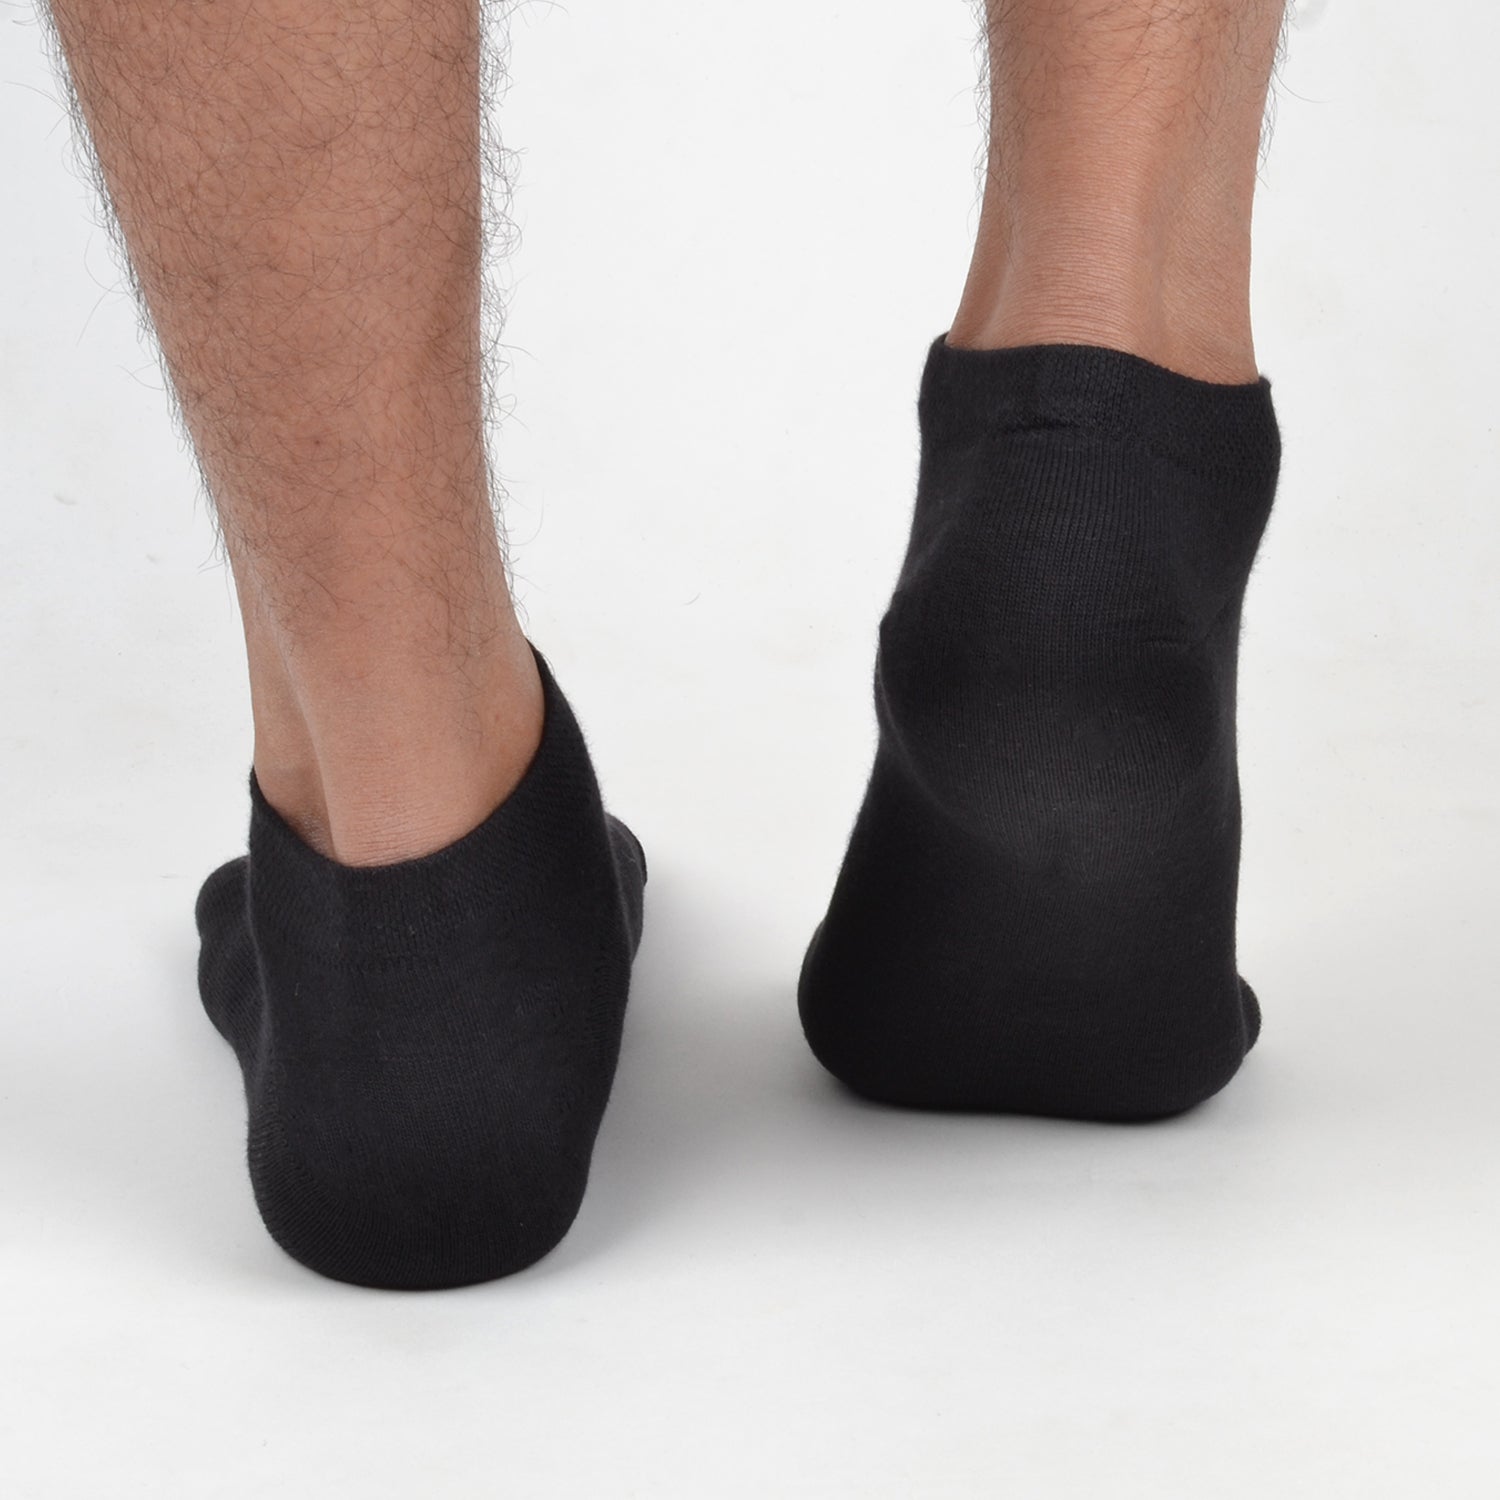 FOOTPRINTS Unisex Solid Cotton Ankle-Length Socks -Pack Of 1 Black